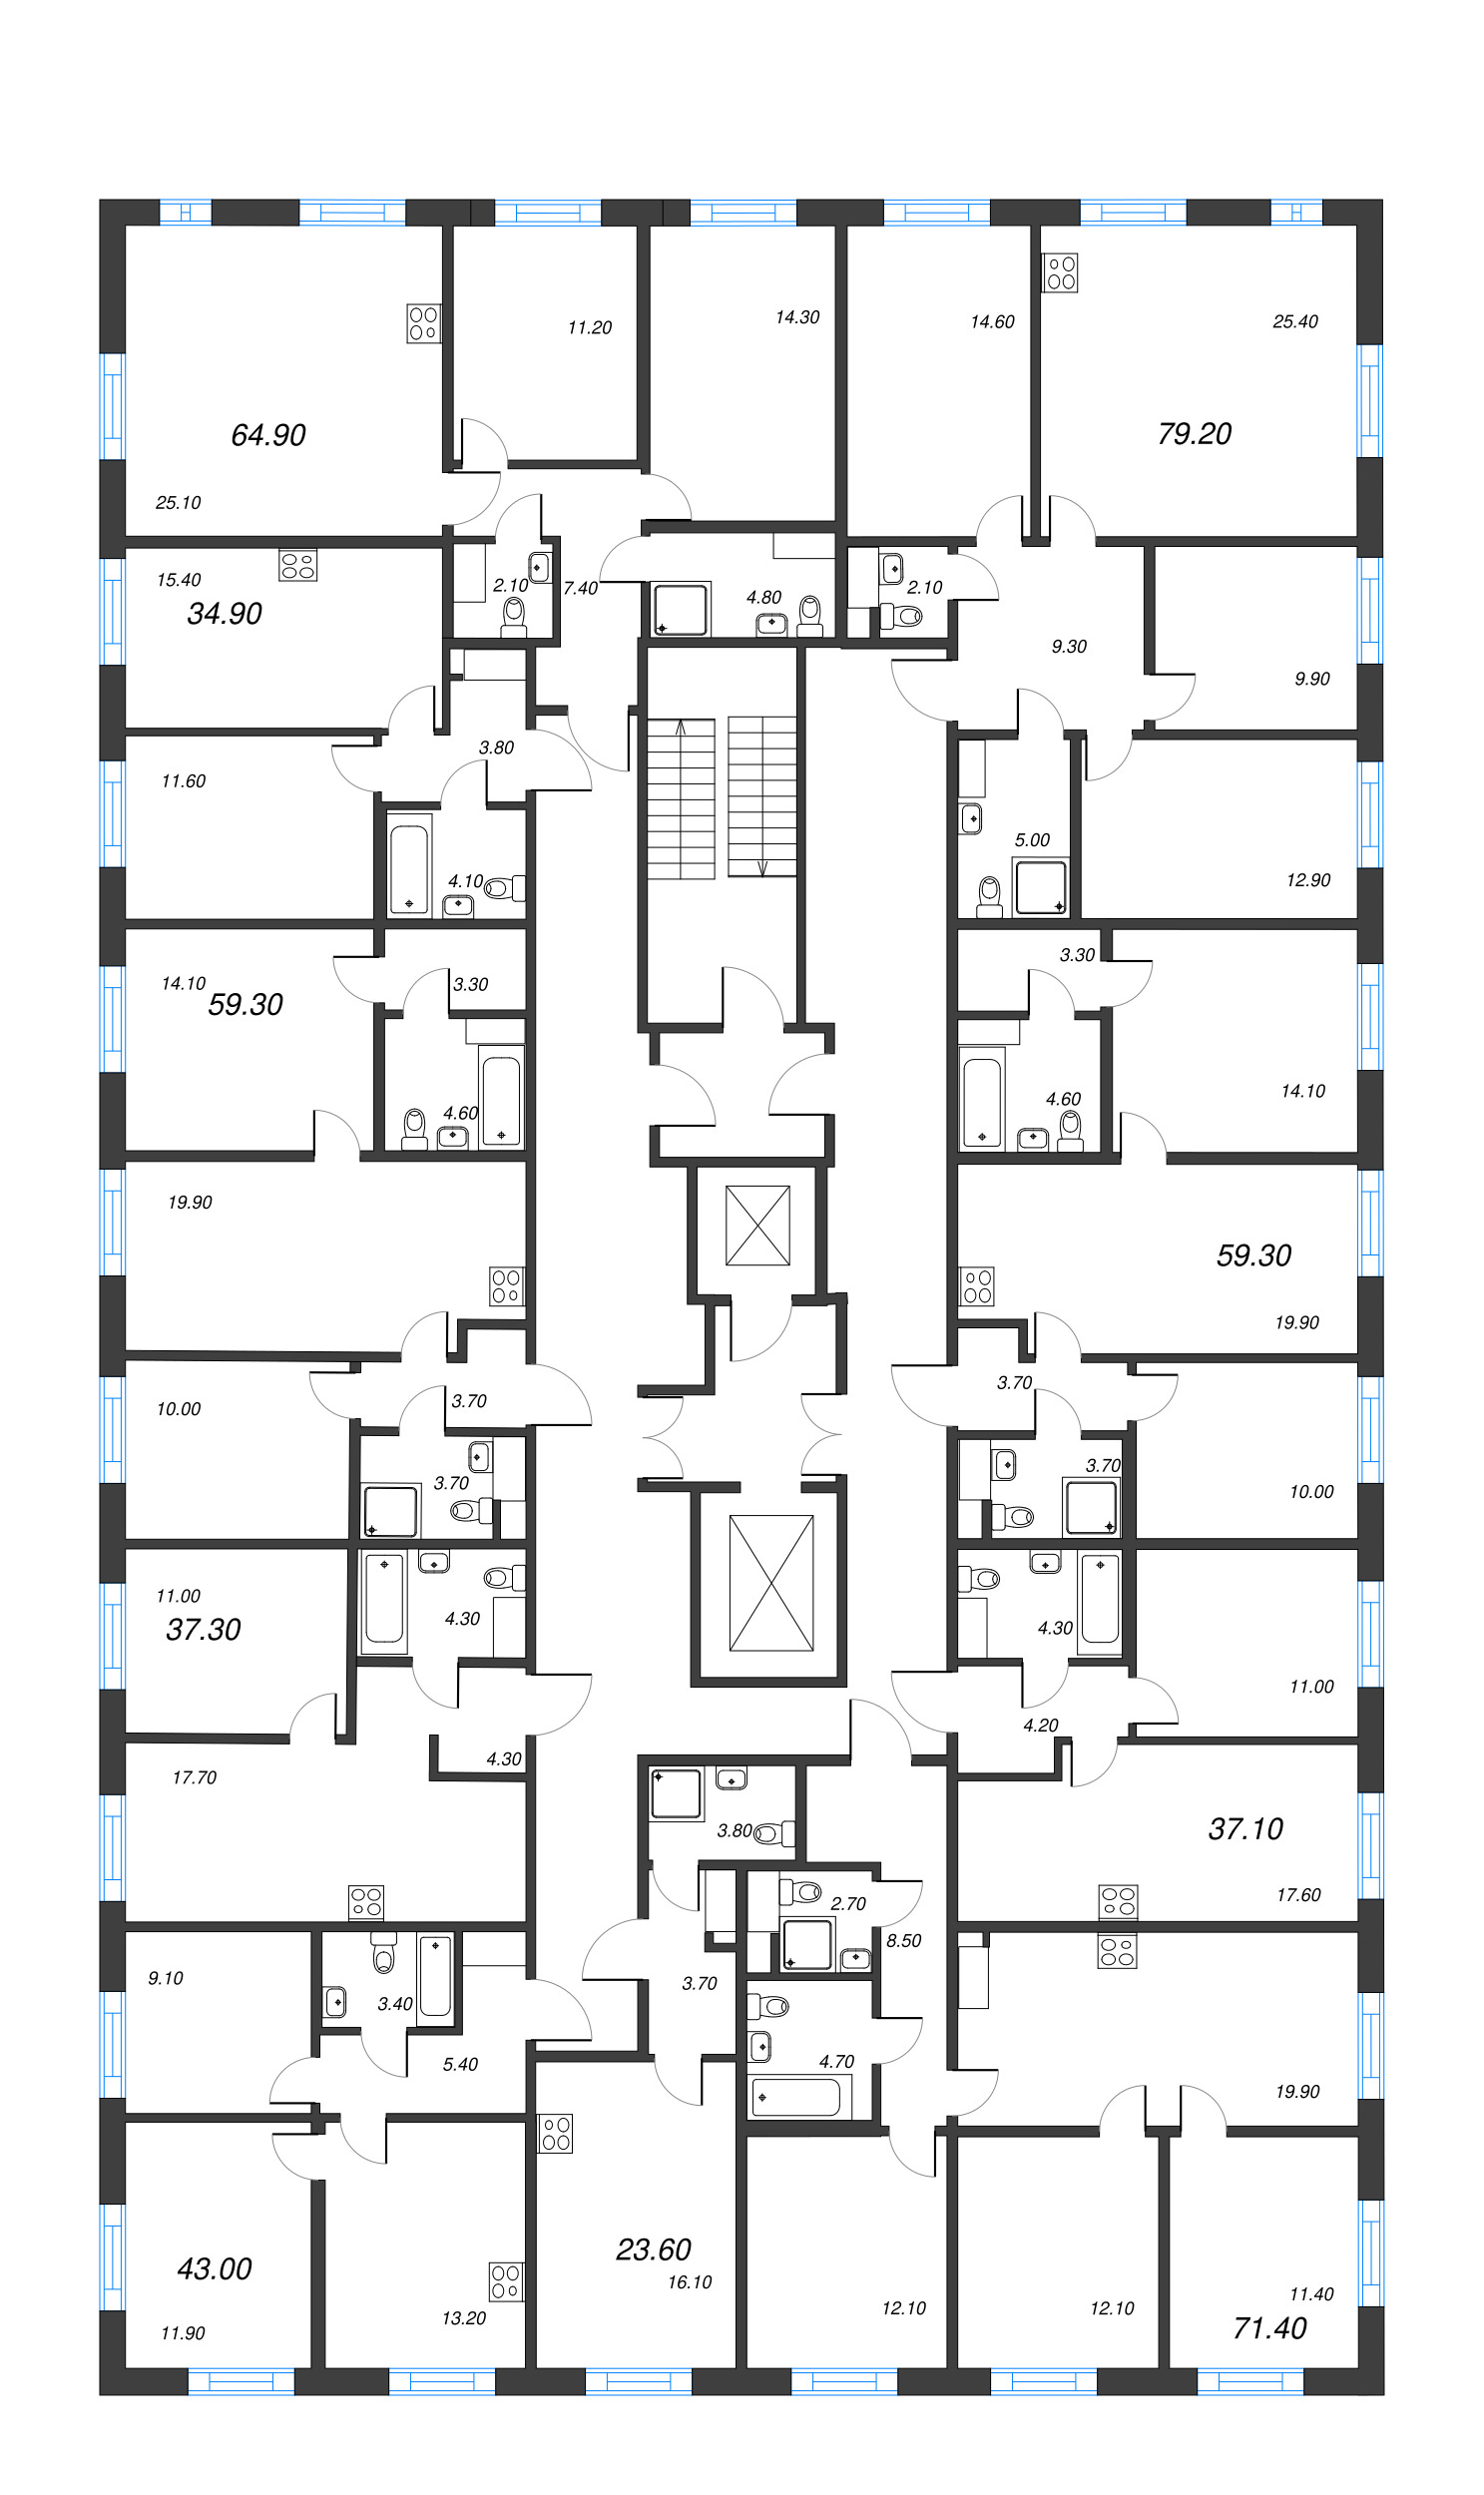 2-комнатная (Евро) квартира, 37.3 м² - планировка этажа